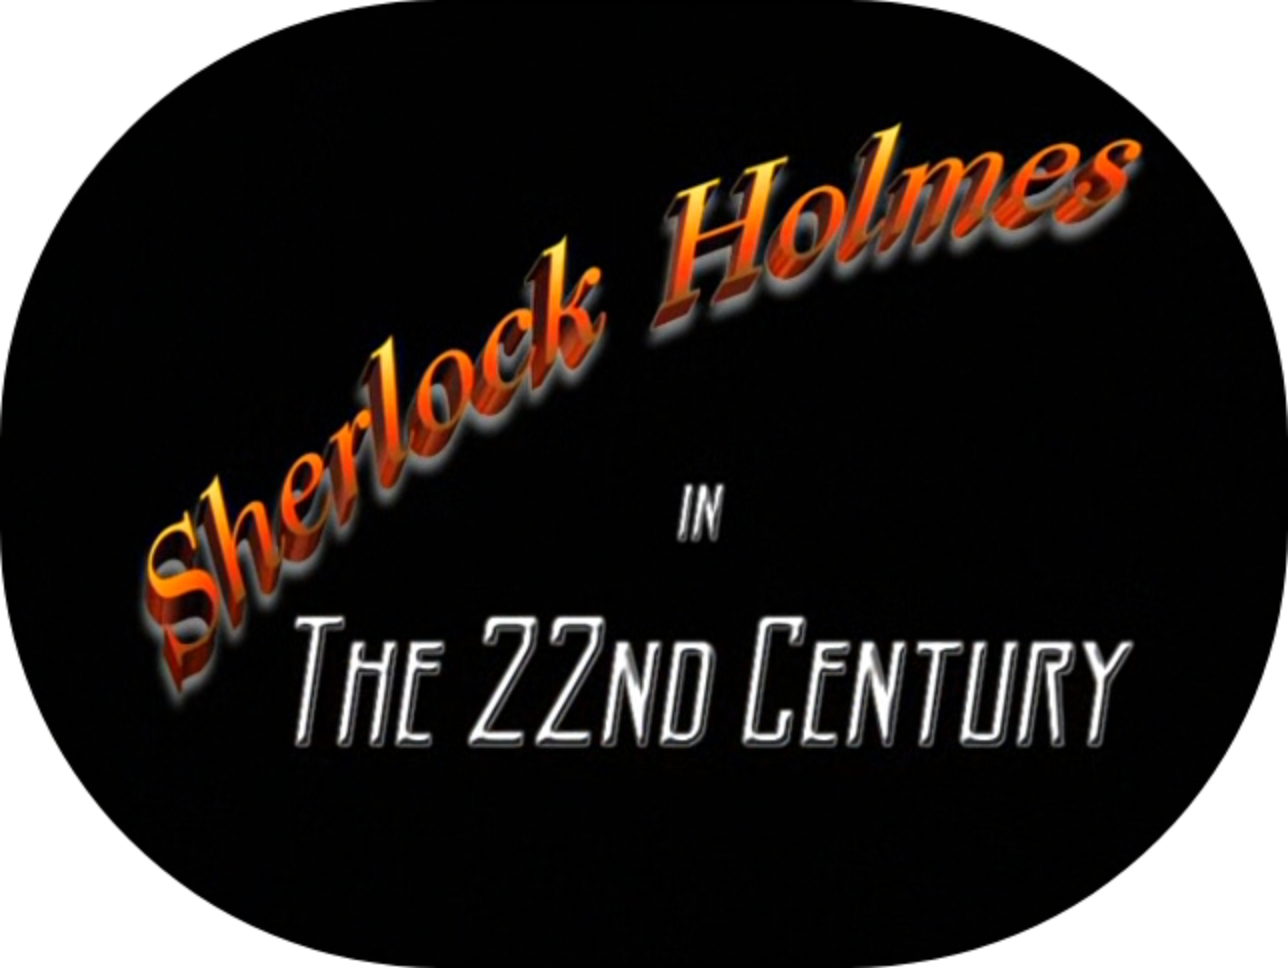 Sherlock Holmes in the 22nd Century 